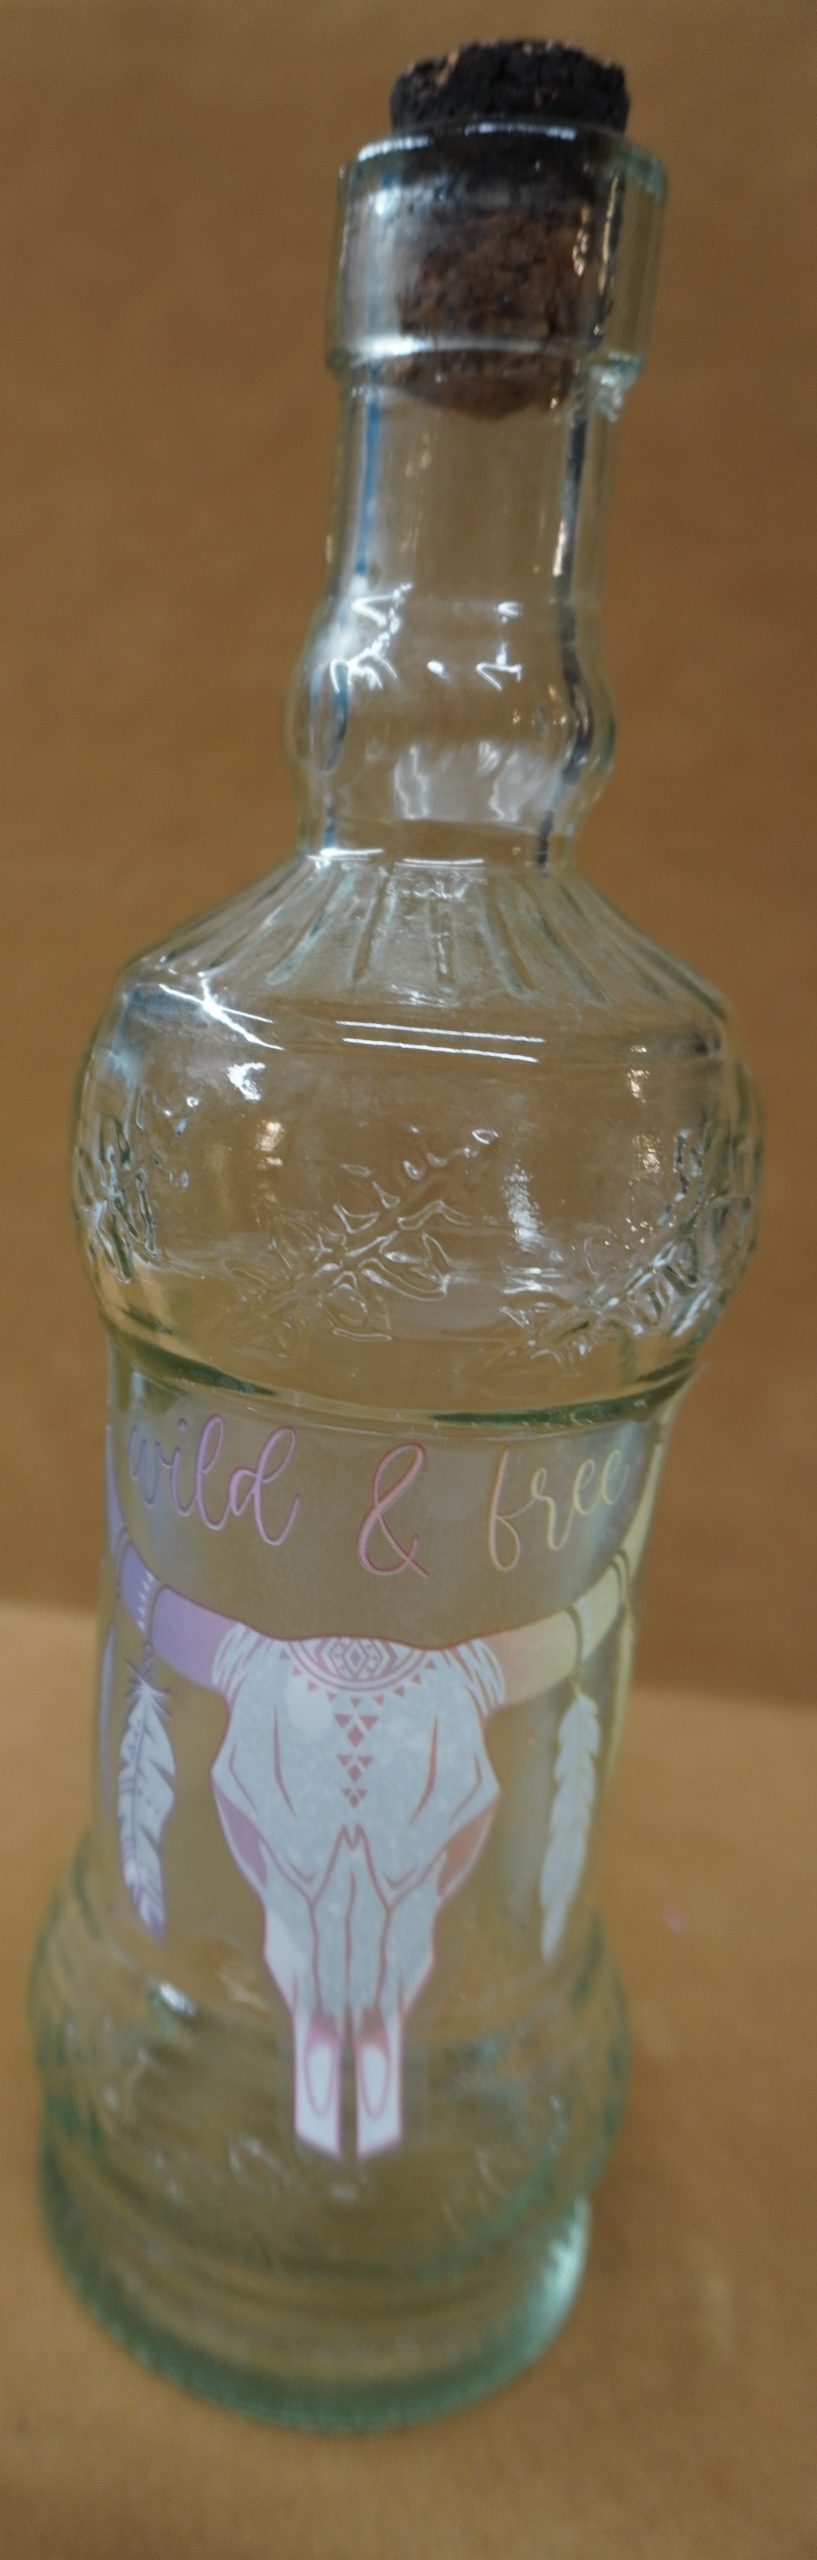 wine bottle decorative